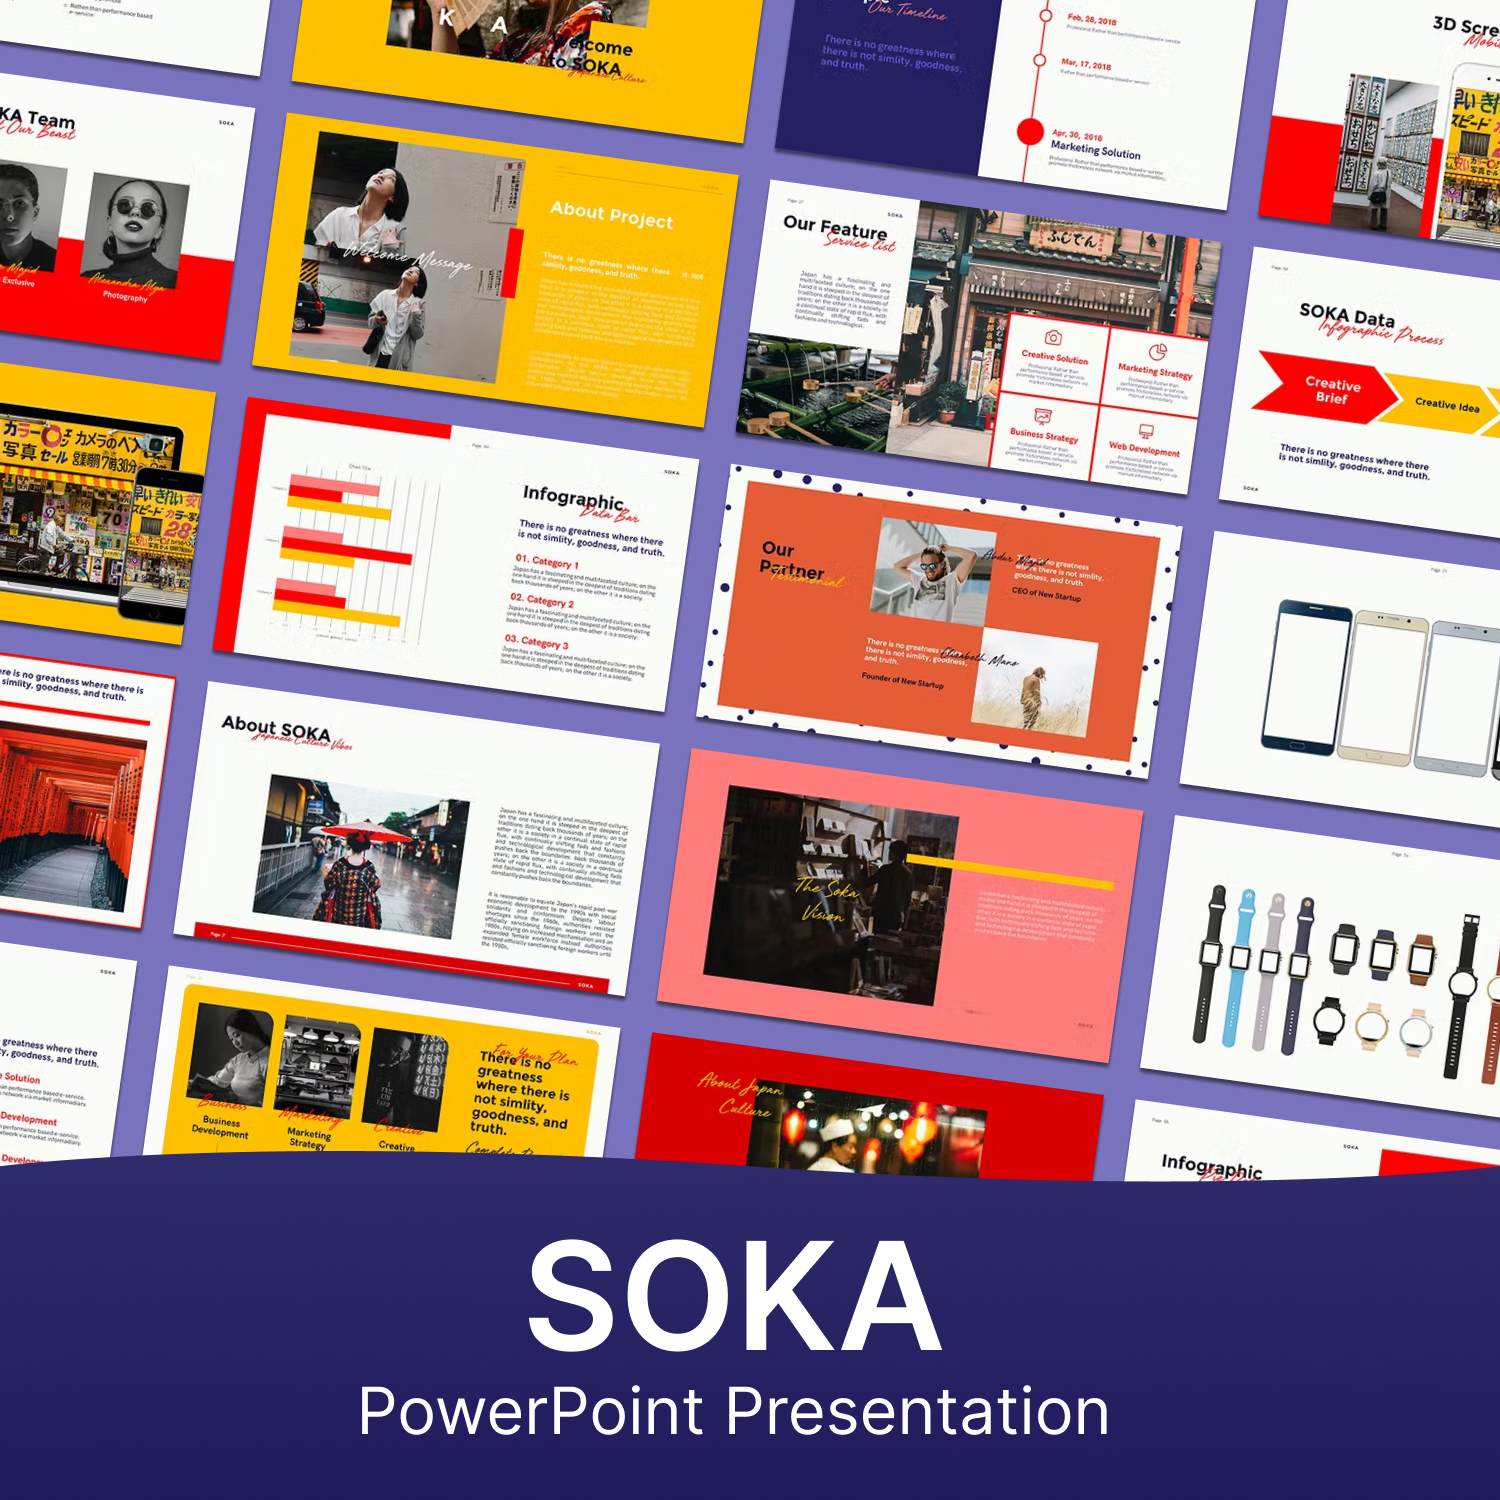 Soka powerpoint presentation - main image preview.